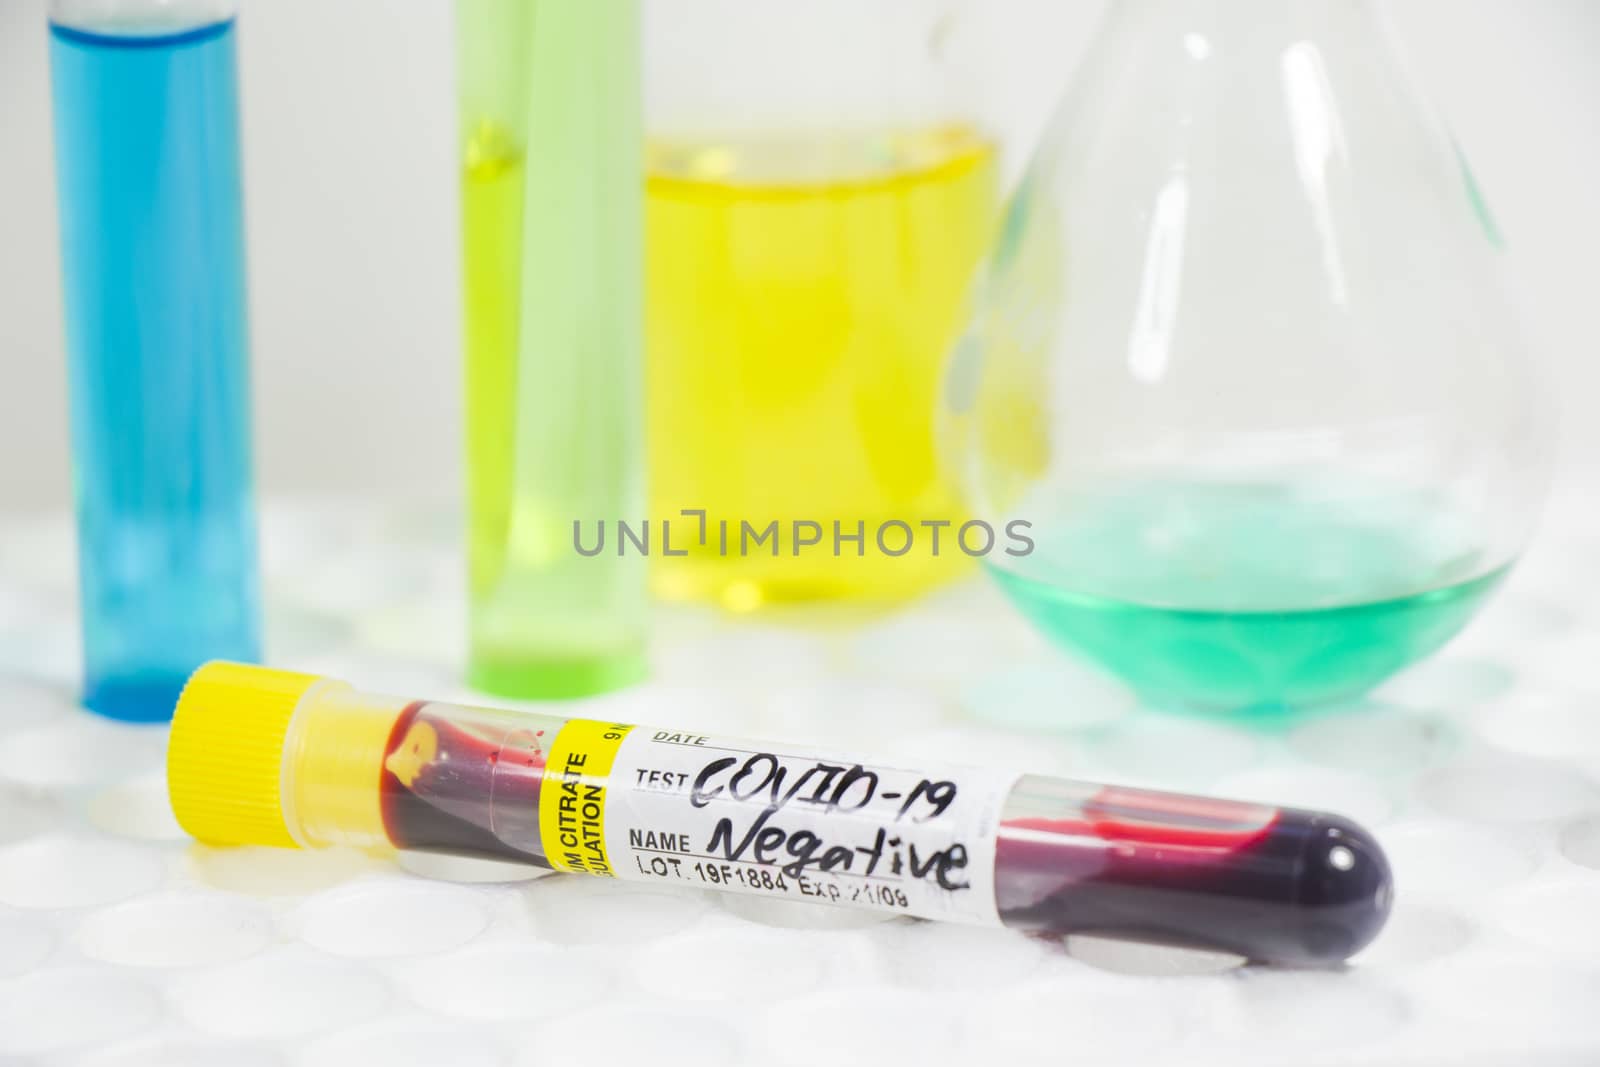 Covid - 19, coronavirus, covid blood test tube sample, laboratory diagnosis.